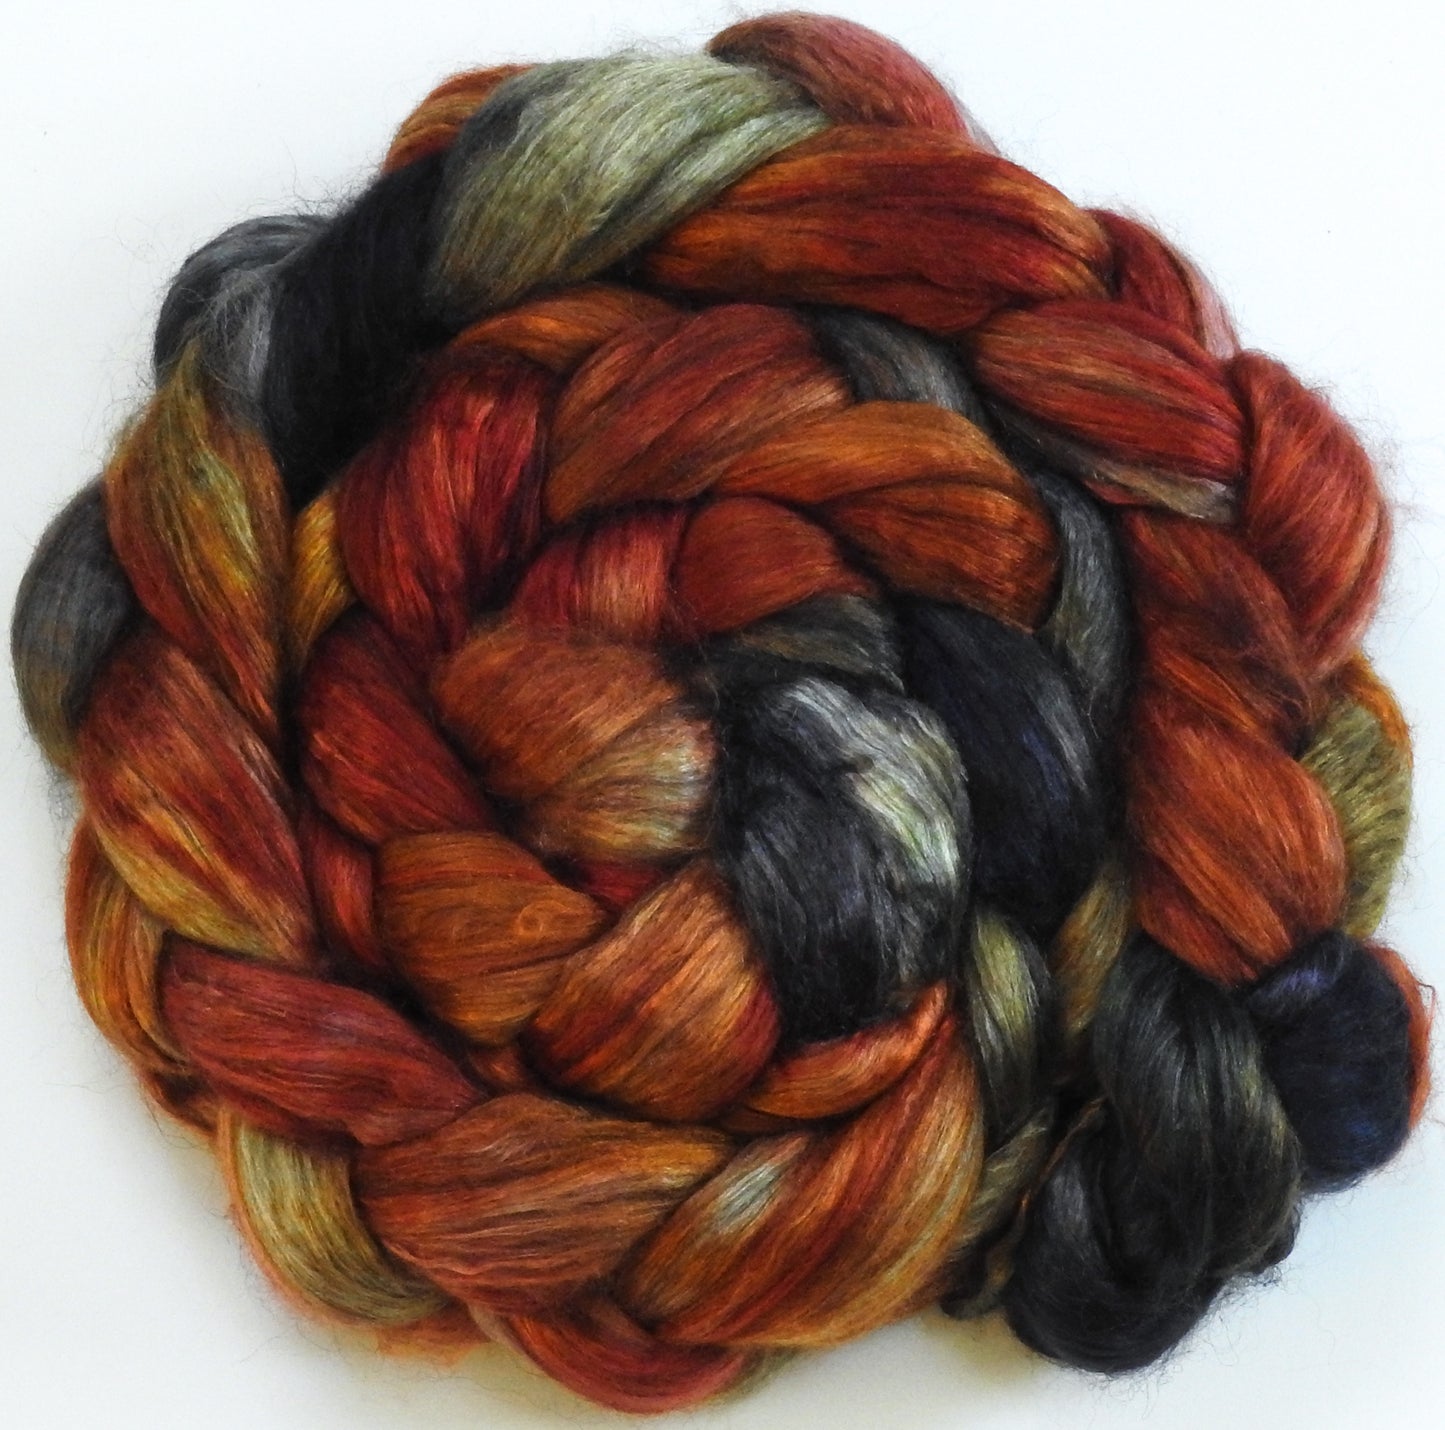 Rowan Berry - YAK / mulberry silk ( 50/50)